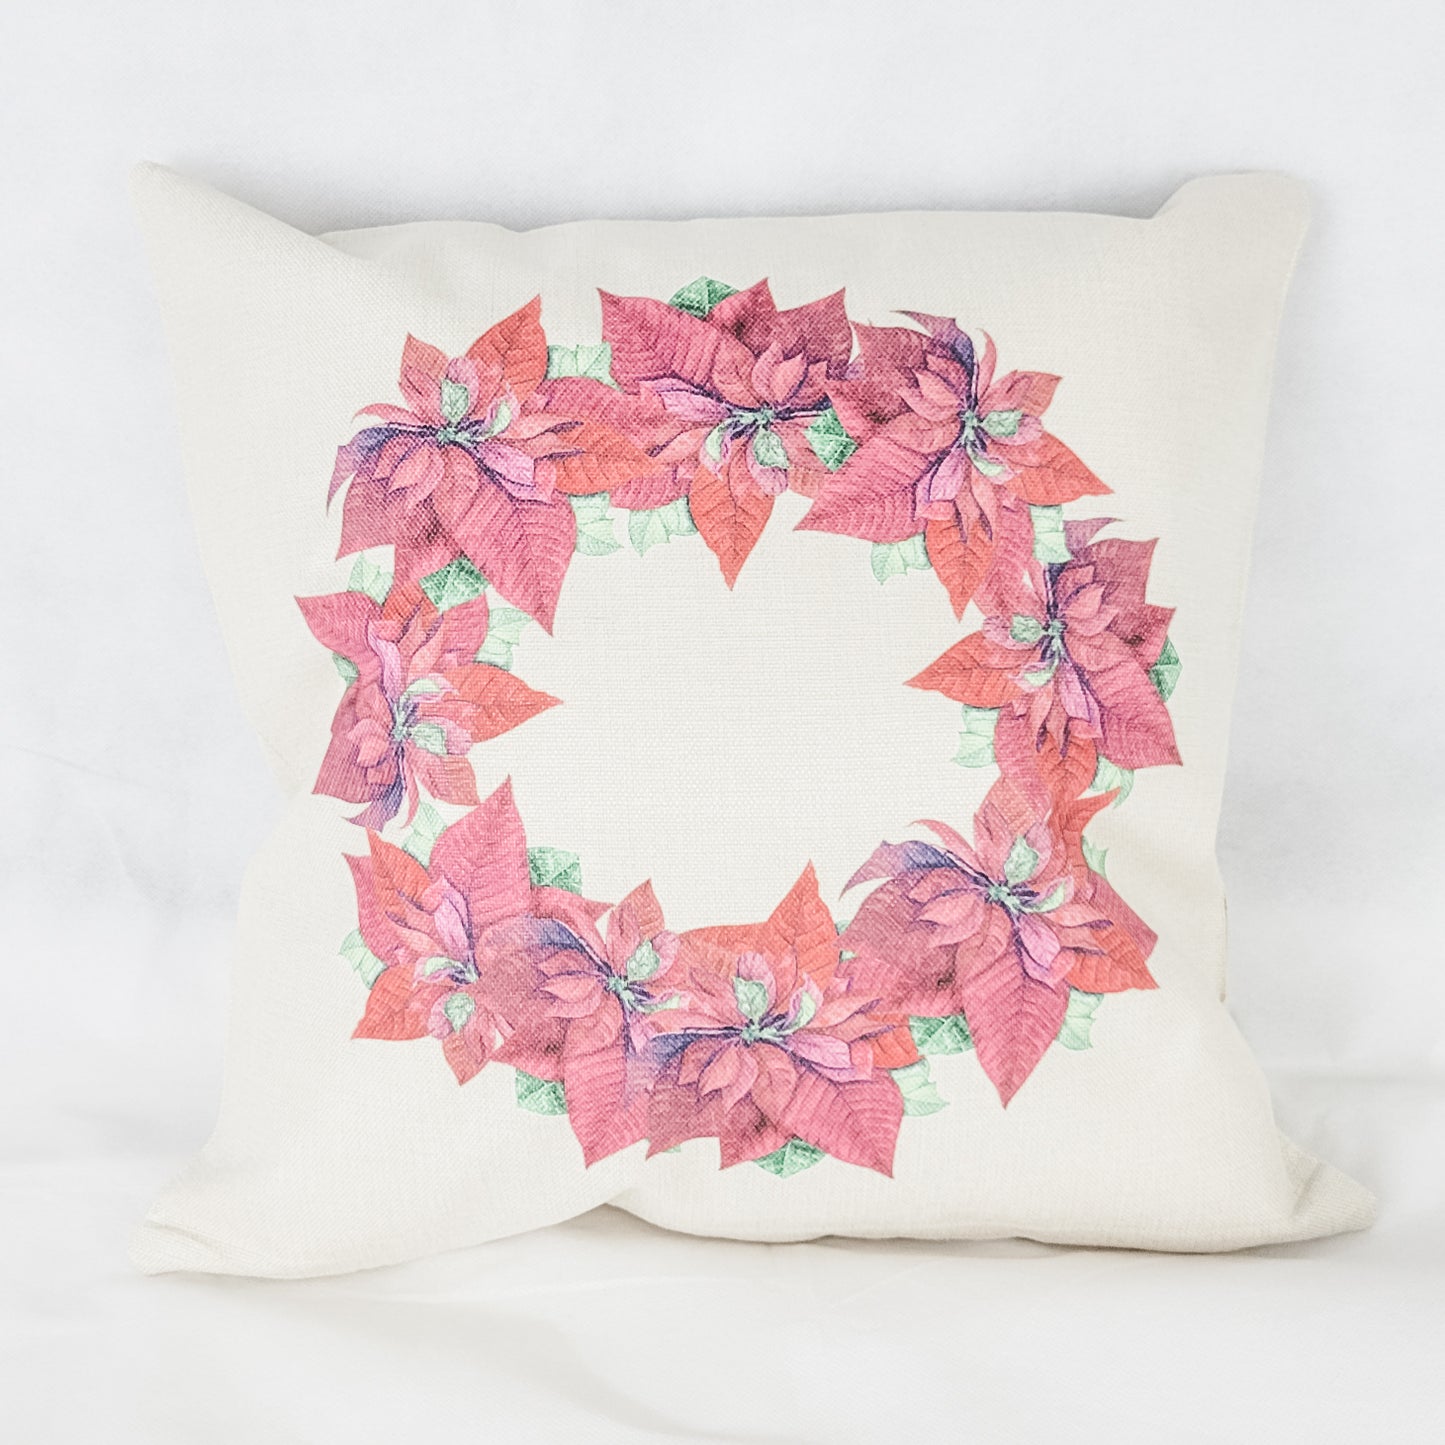 Poinsettia Wreath Pillow Cover